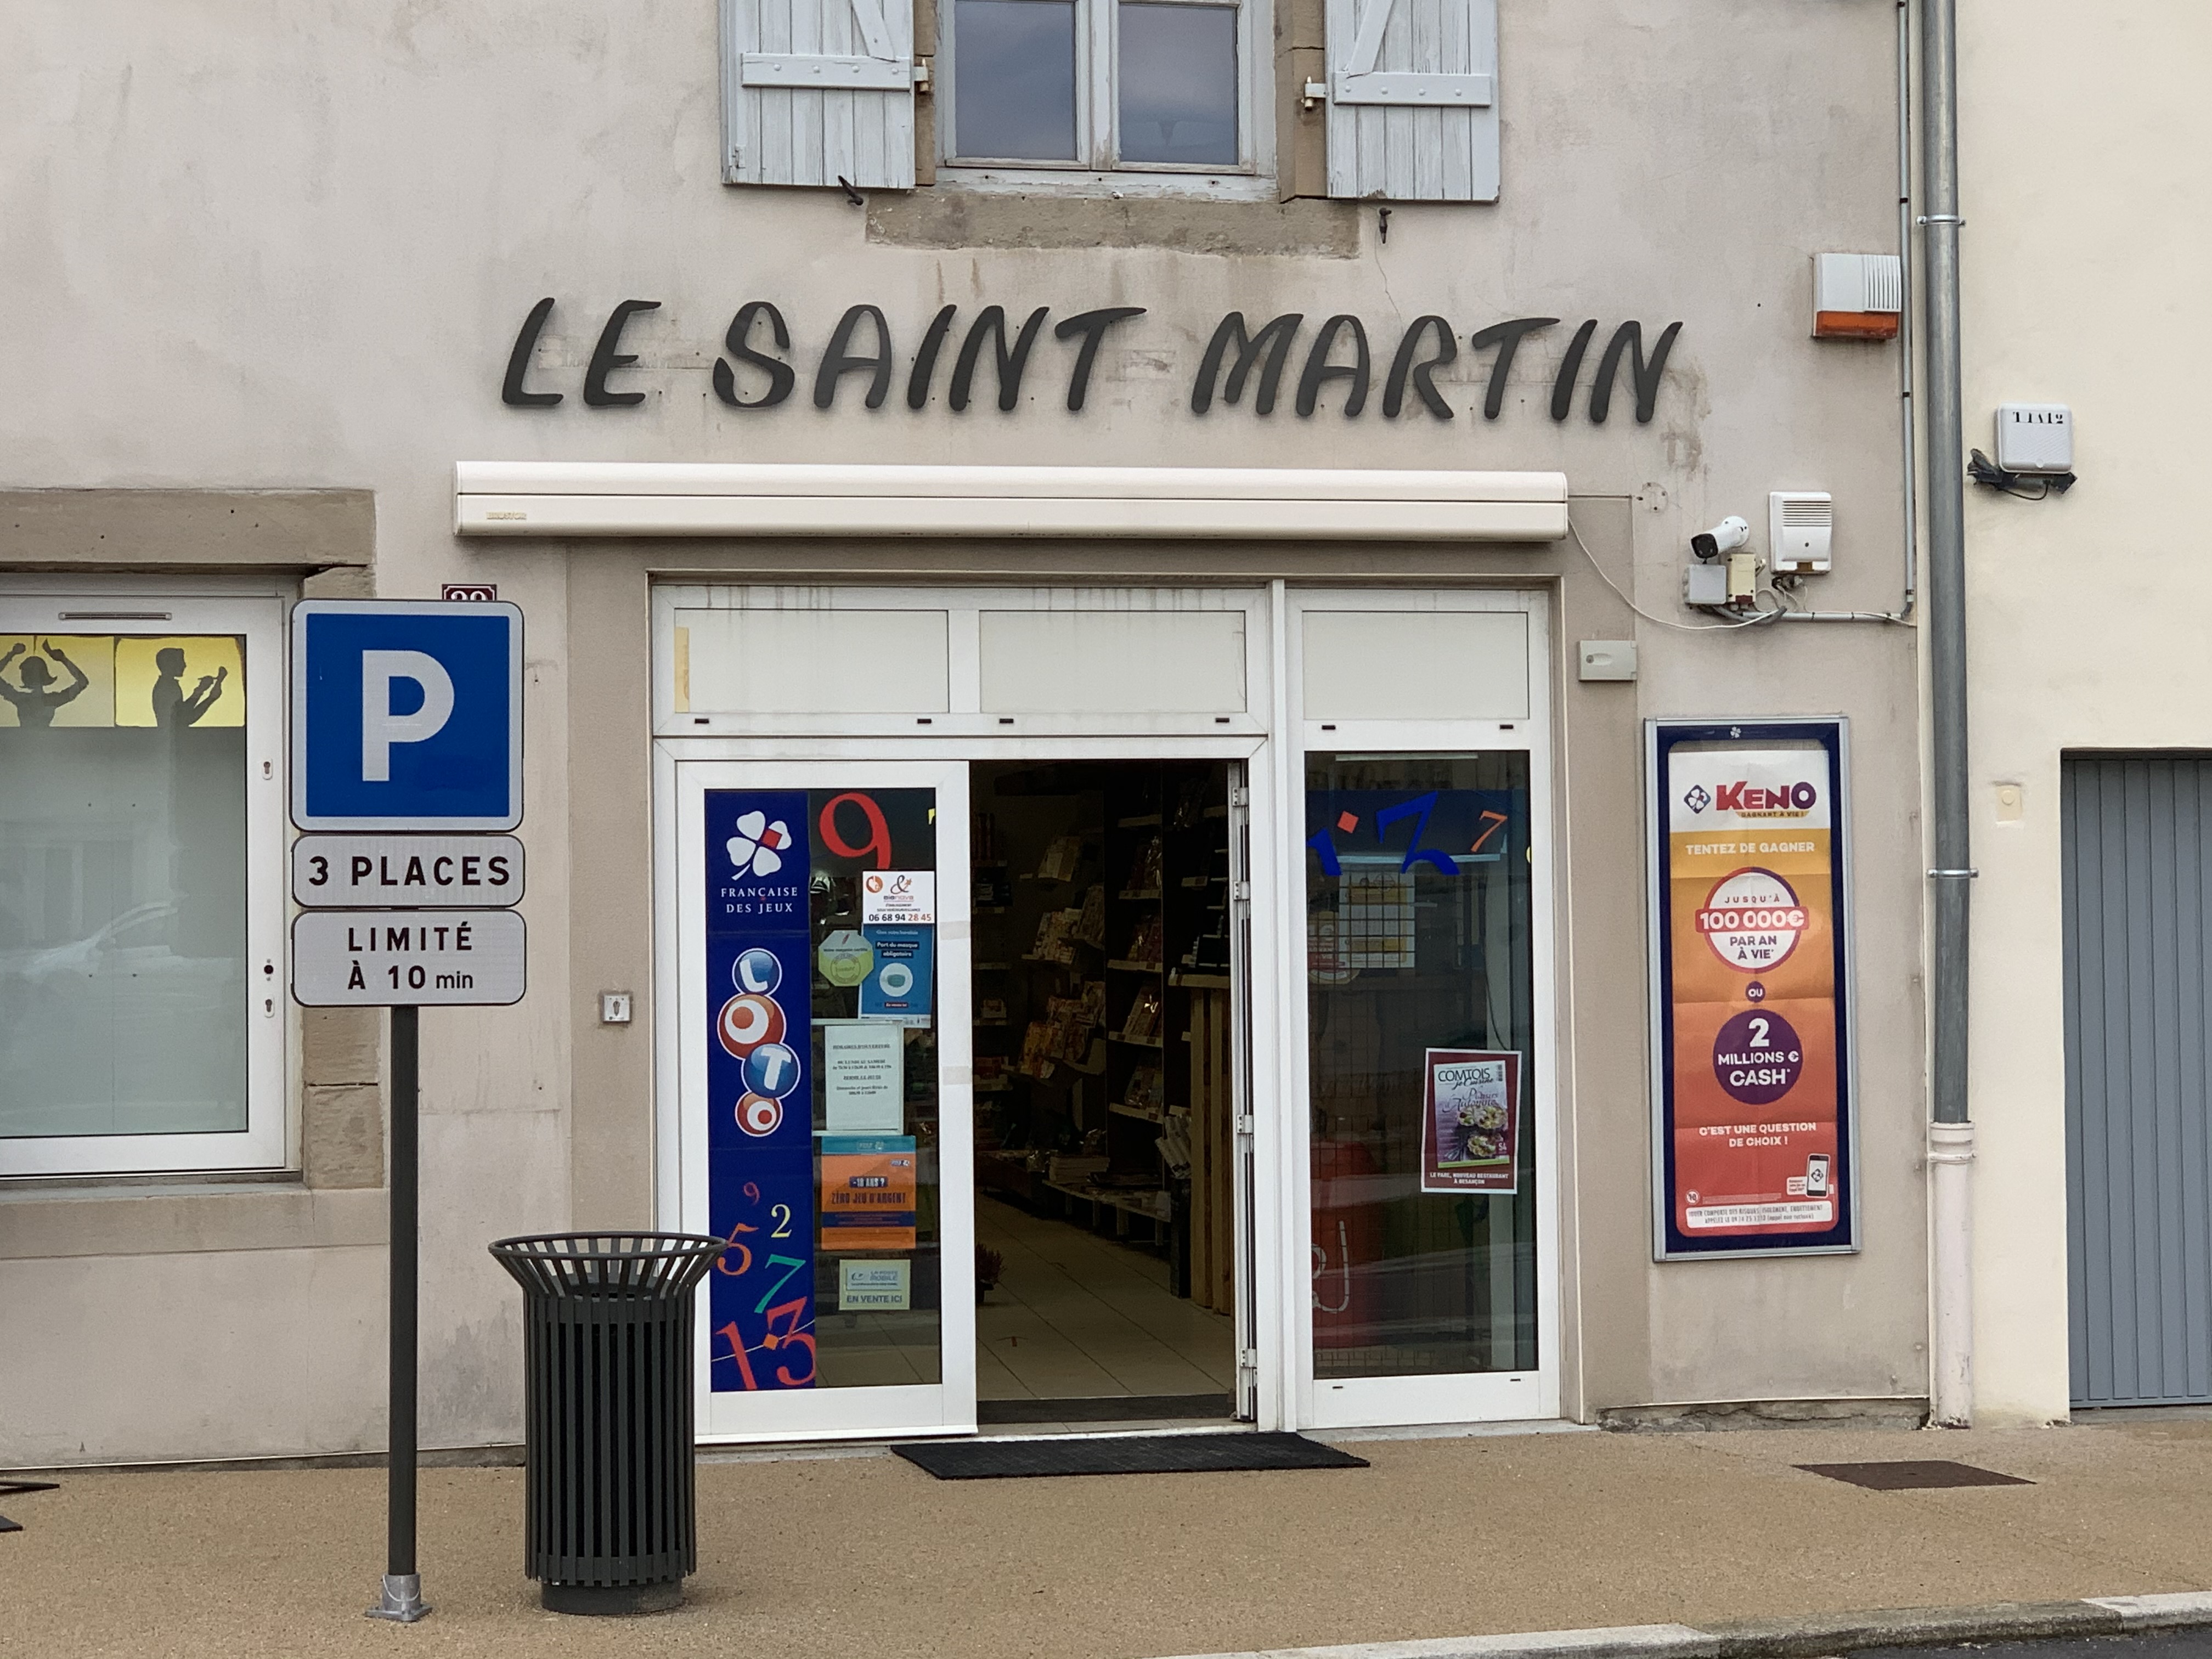 Le Saint Martin.jpg